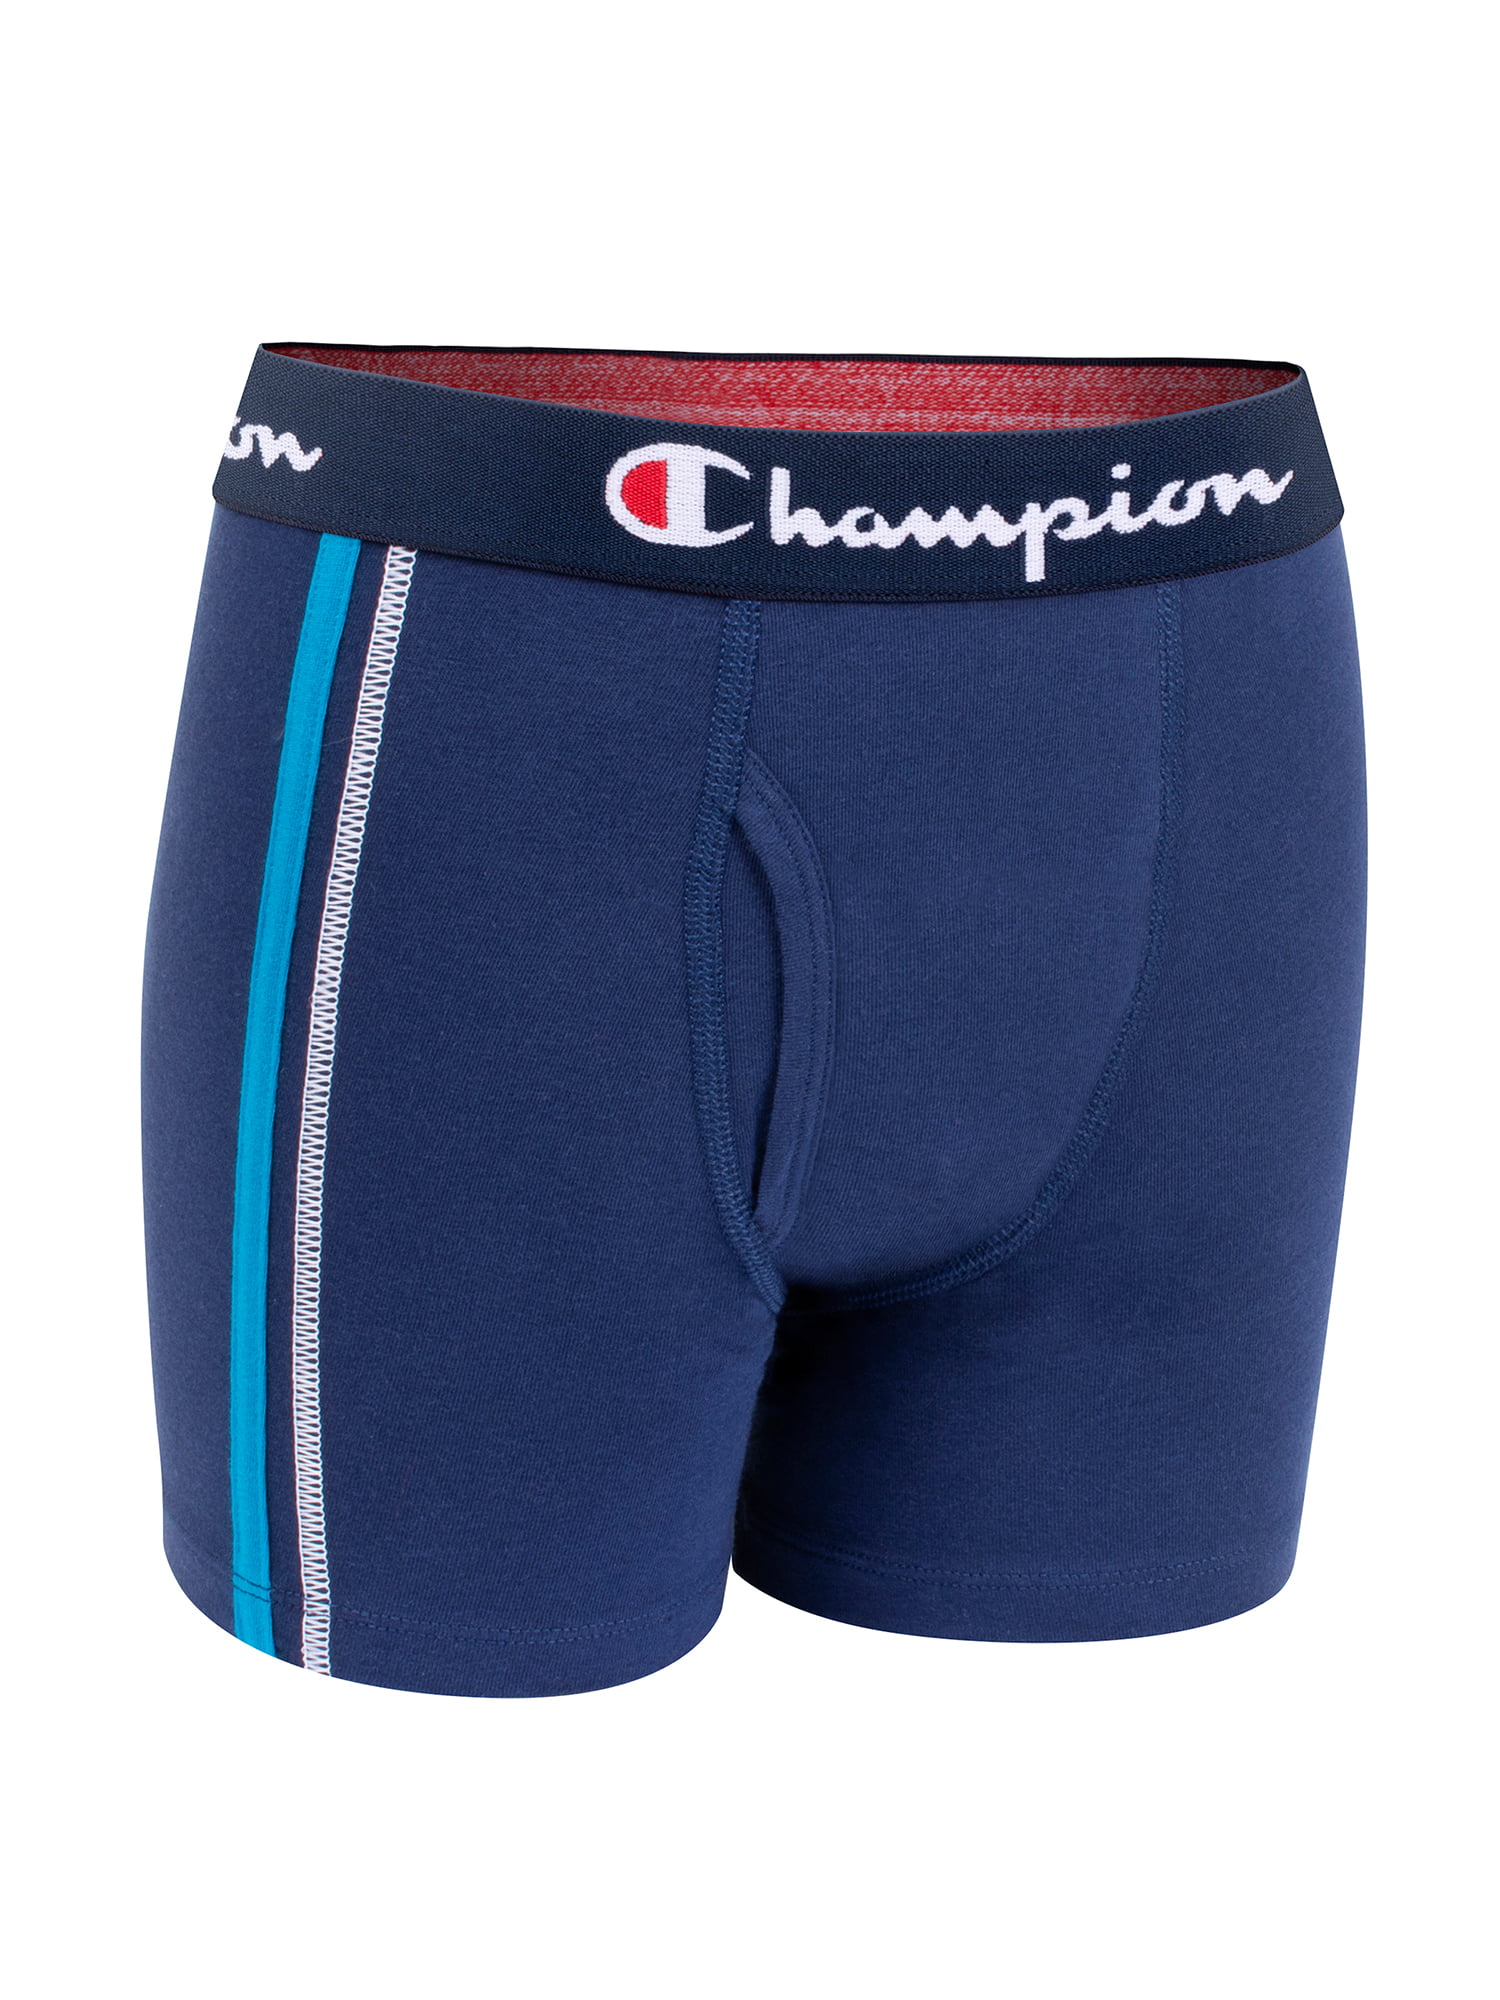 Champion Boys' Cotton Stretch Boxer Briefs 4 Pack, Sizes S-XL 